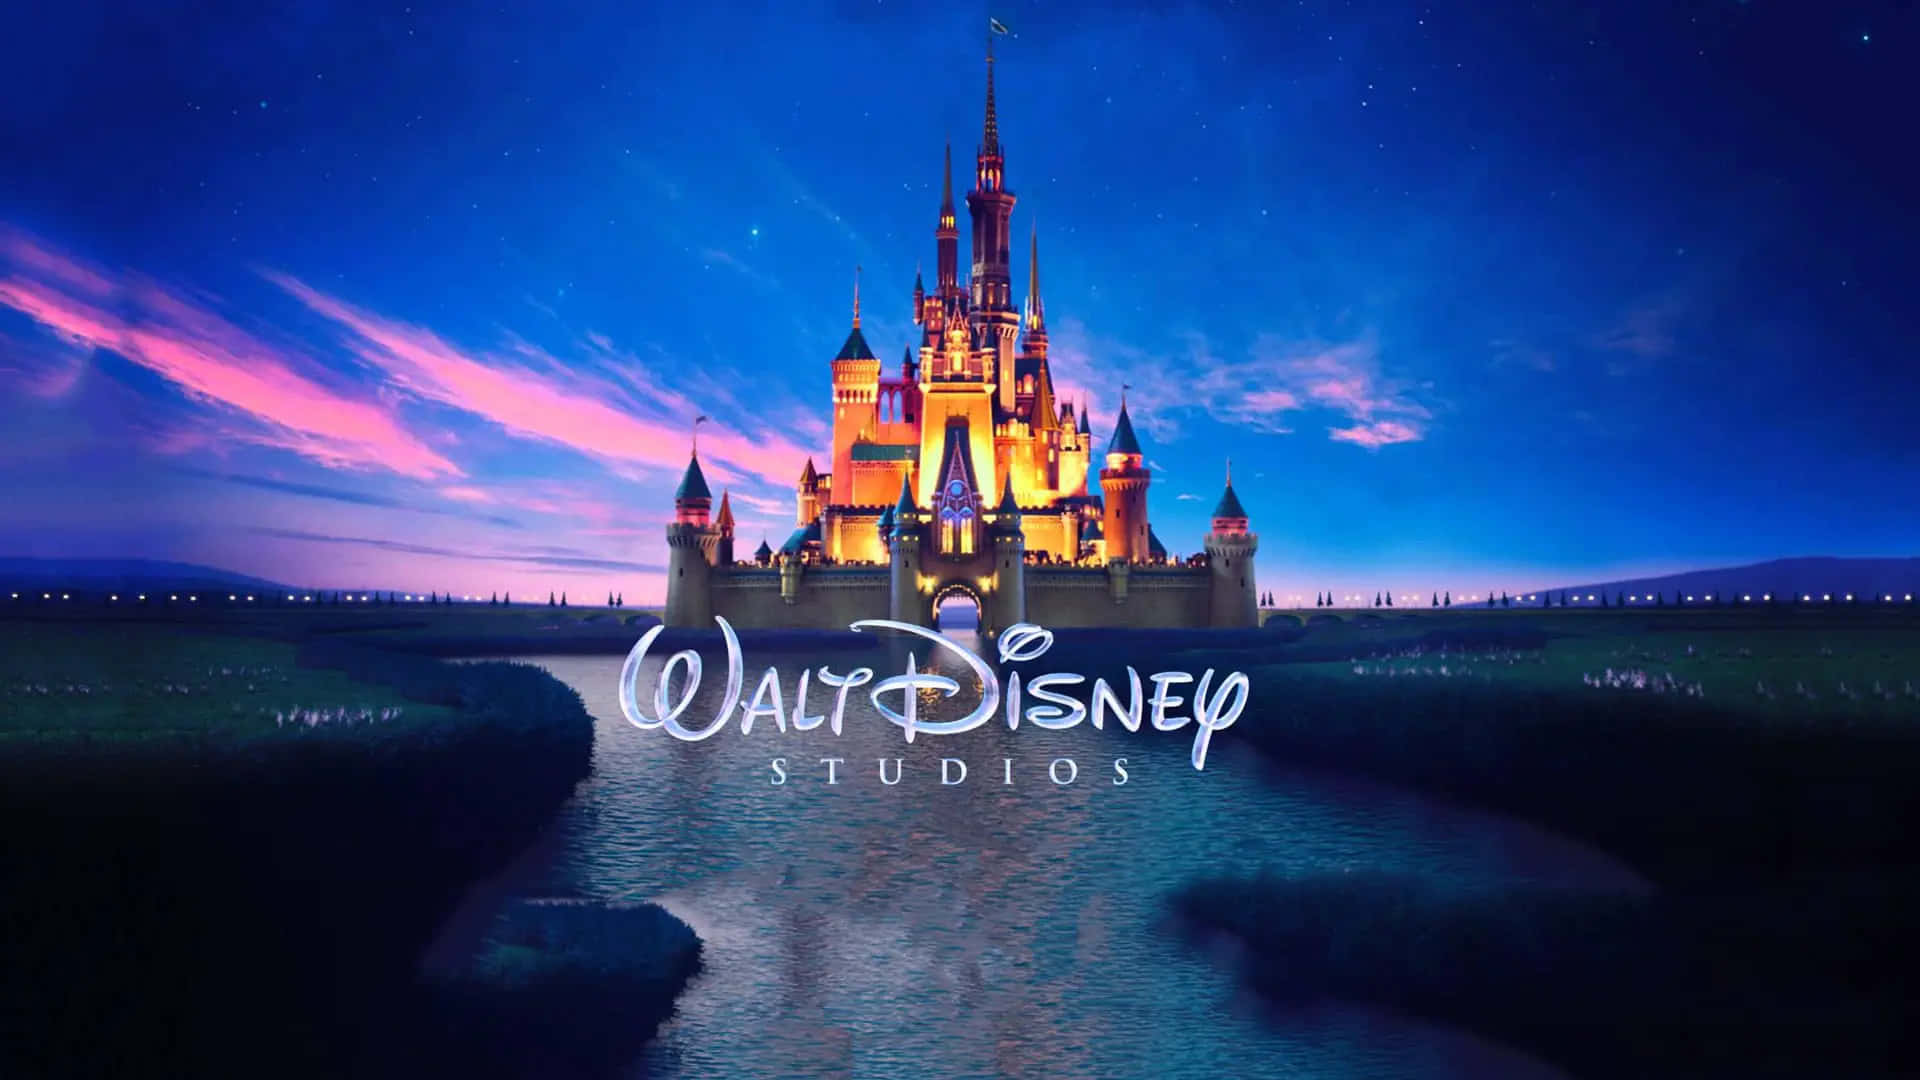 Celebrate the magic of Walt Disney Studios Motion Pictures